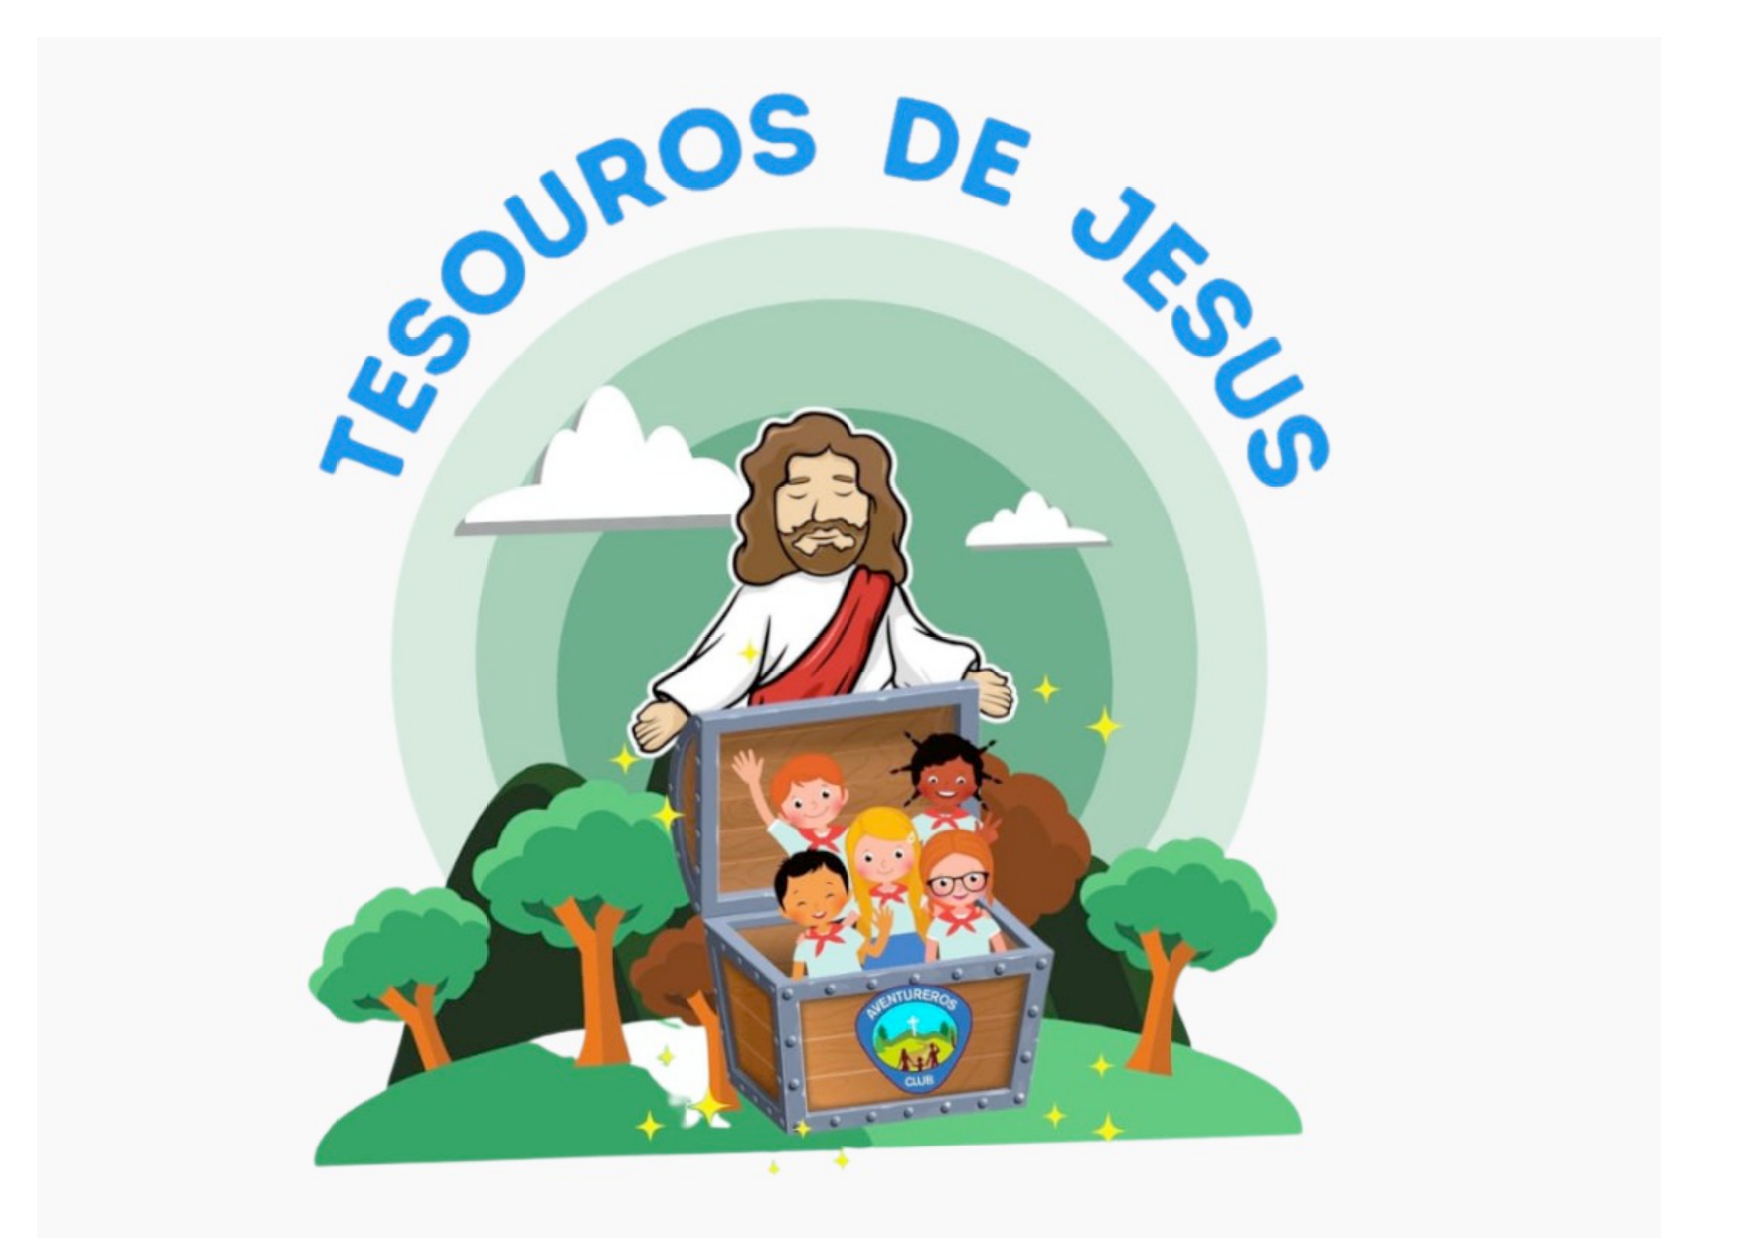 TESOUROS DE JESUS